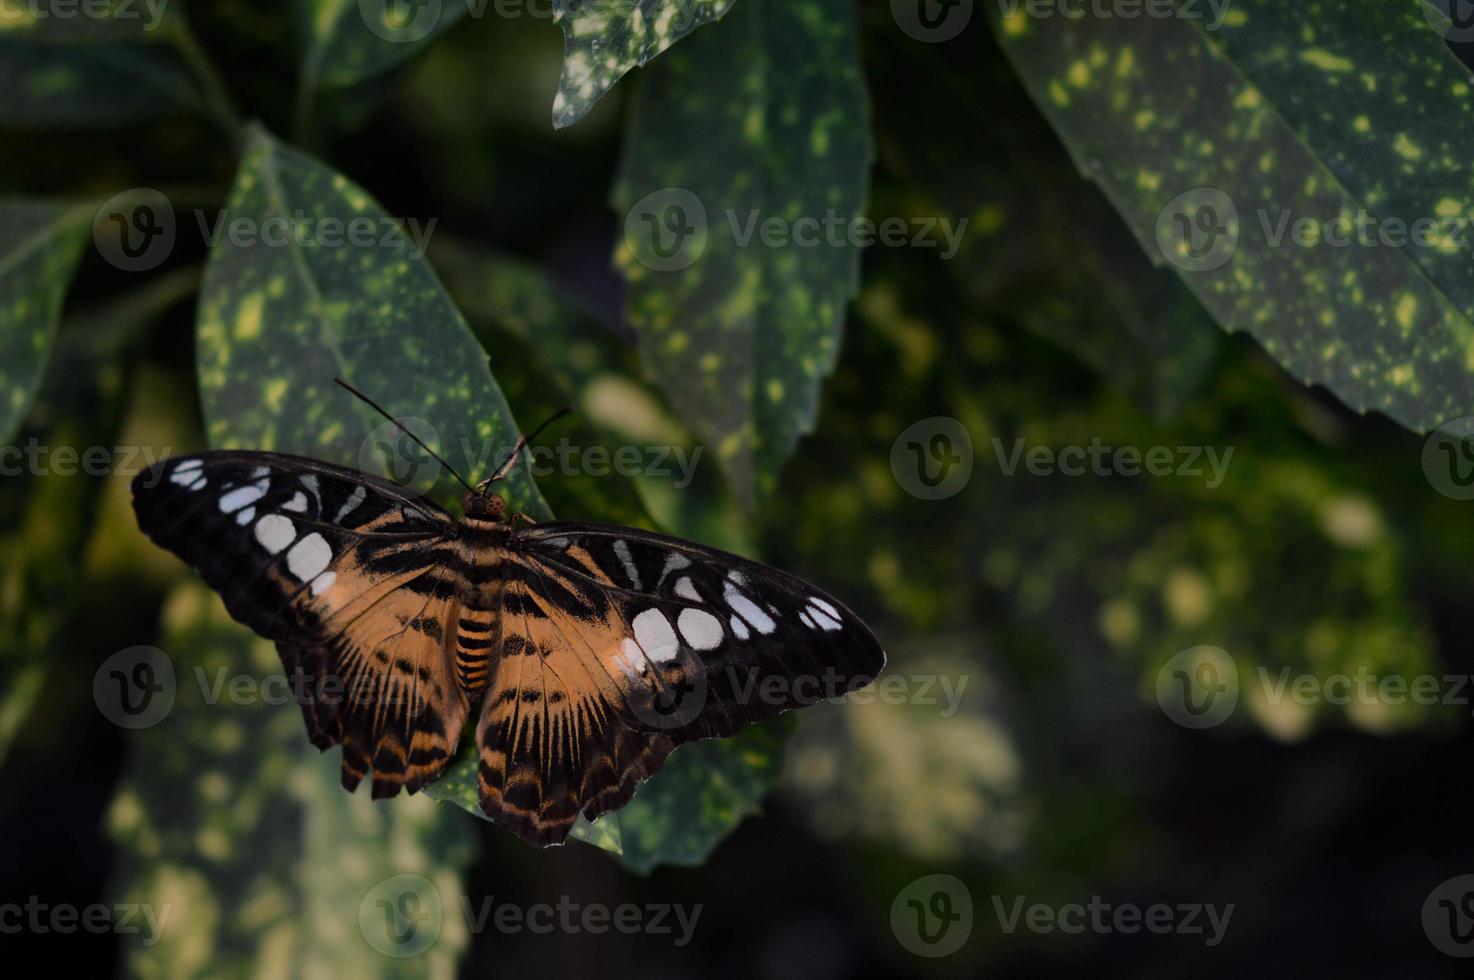 parthenos Sylvia, oranje tondeuse vlinder, foto